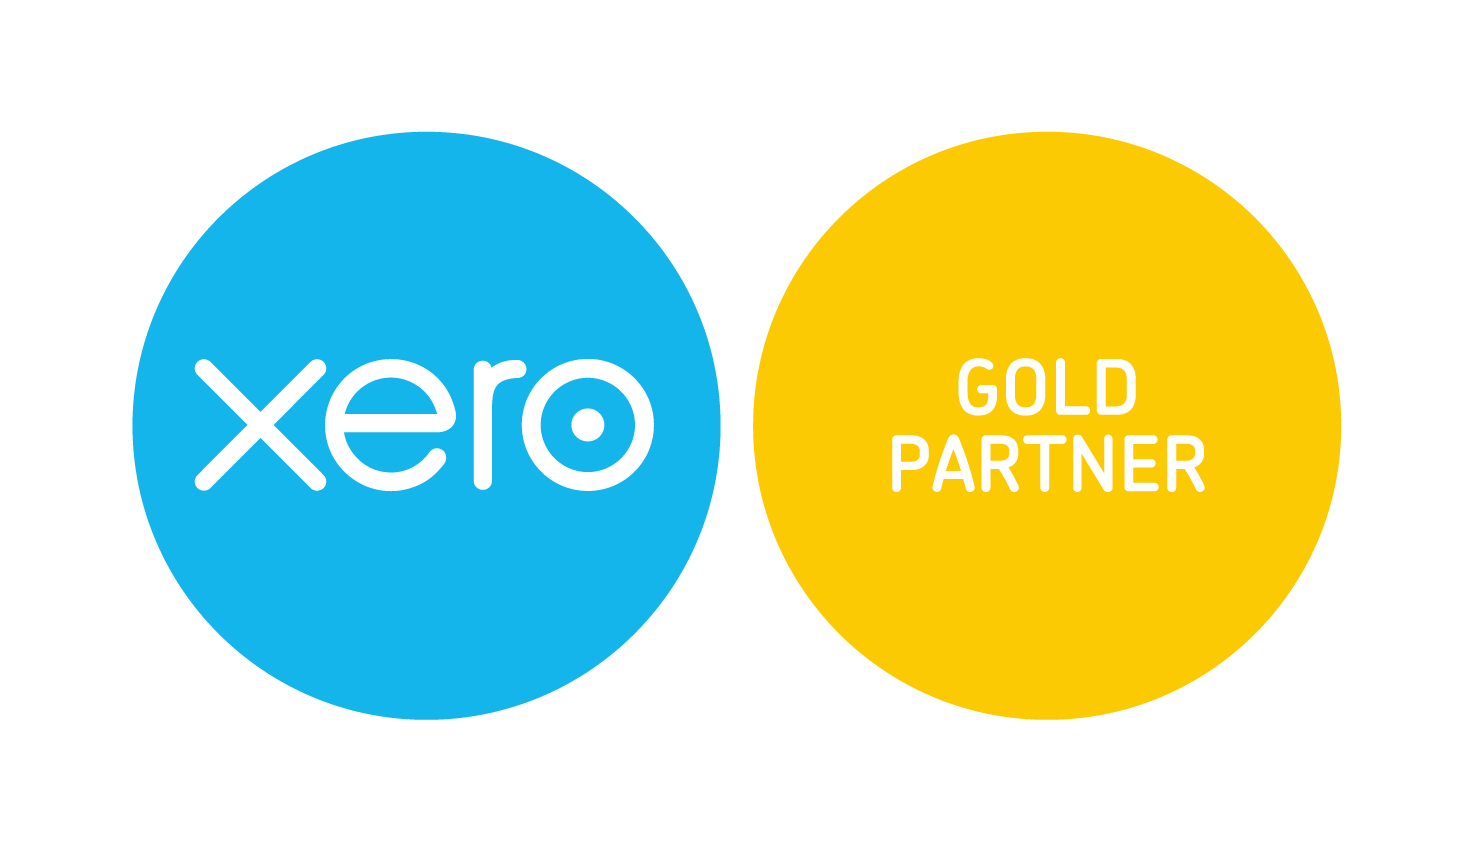 xero gold partner badge